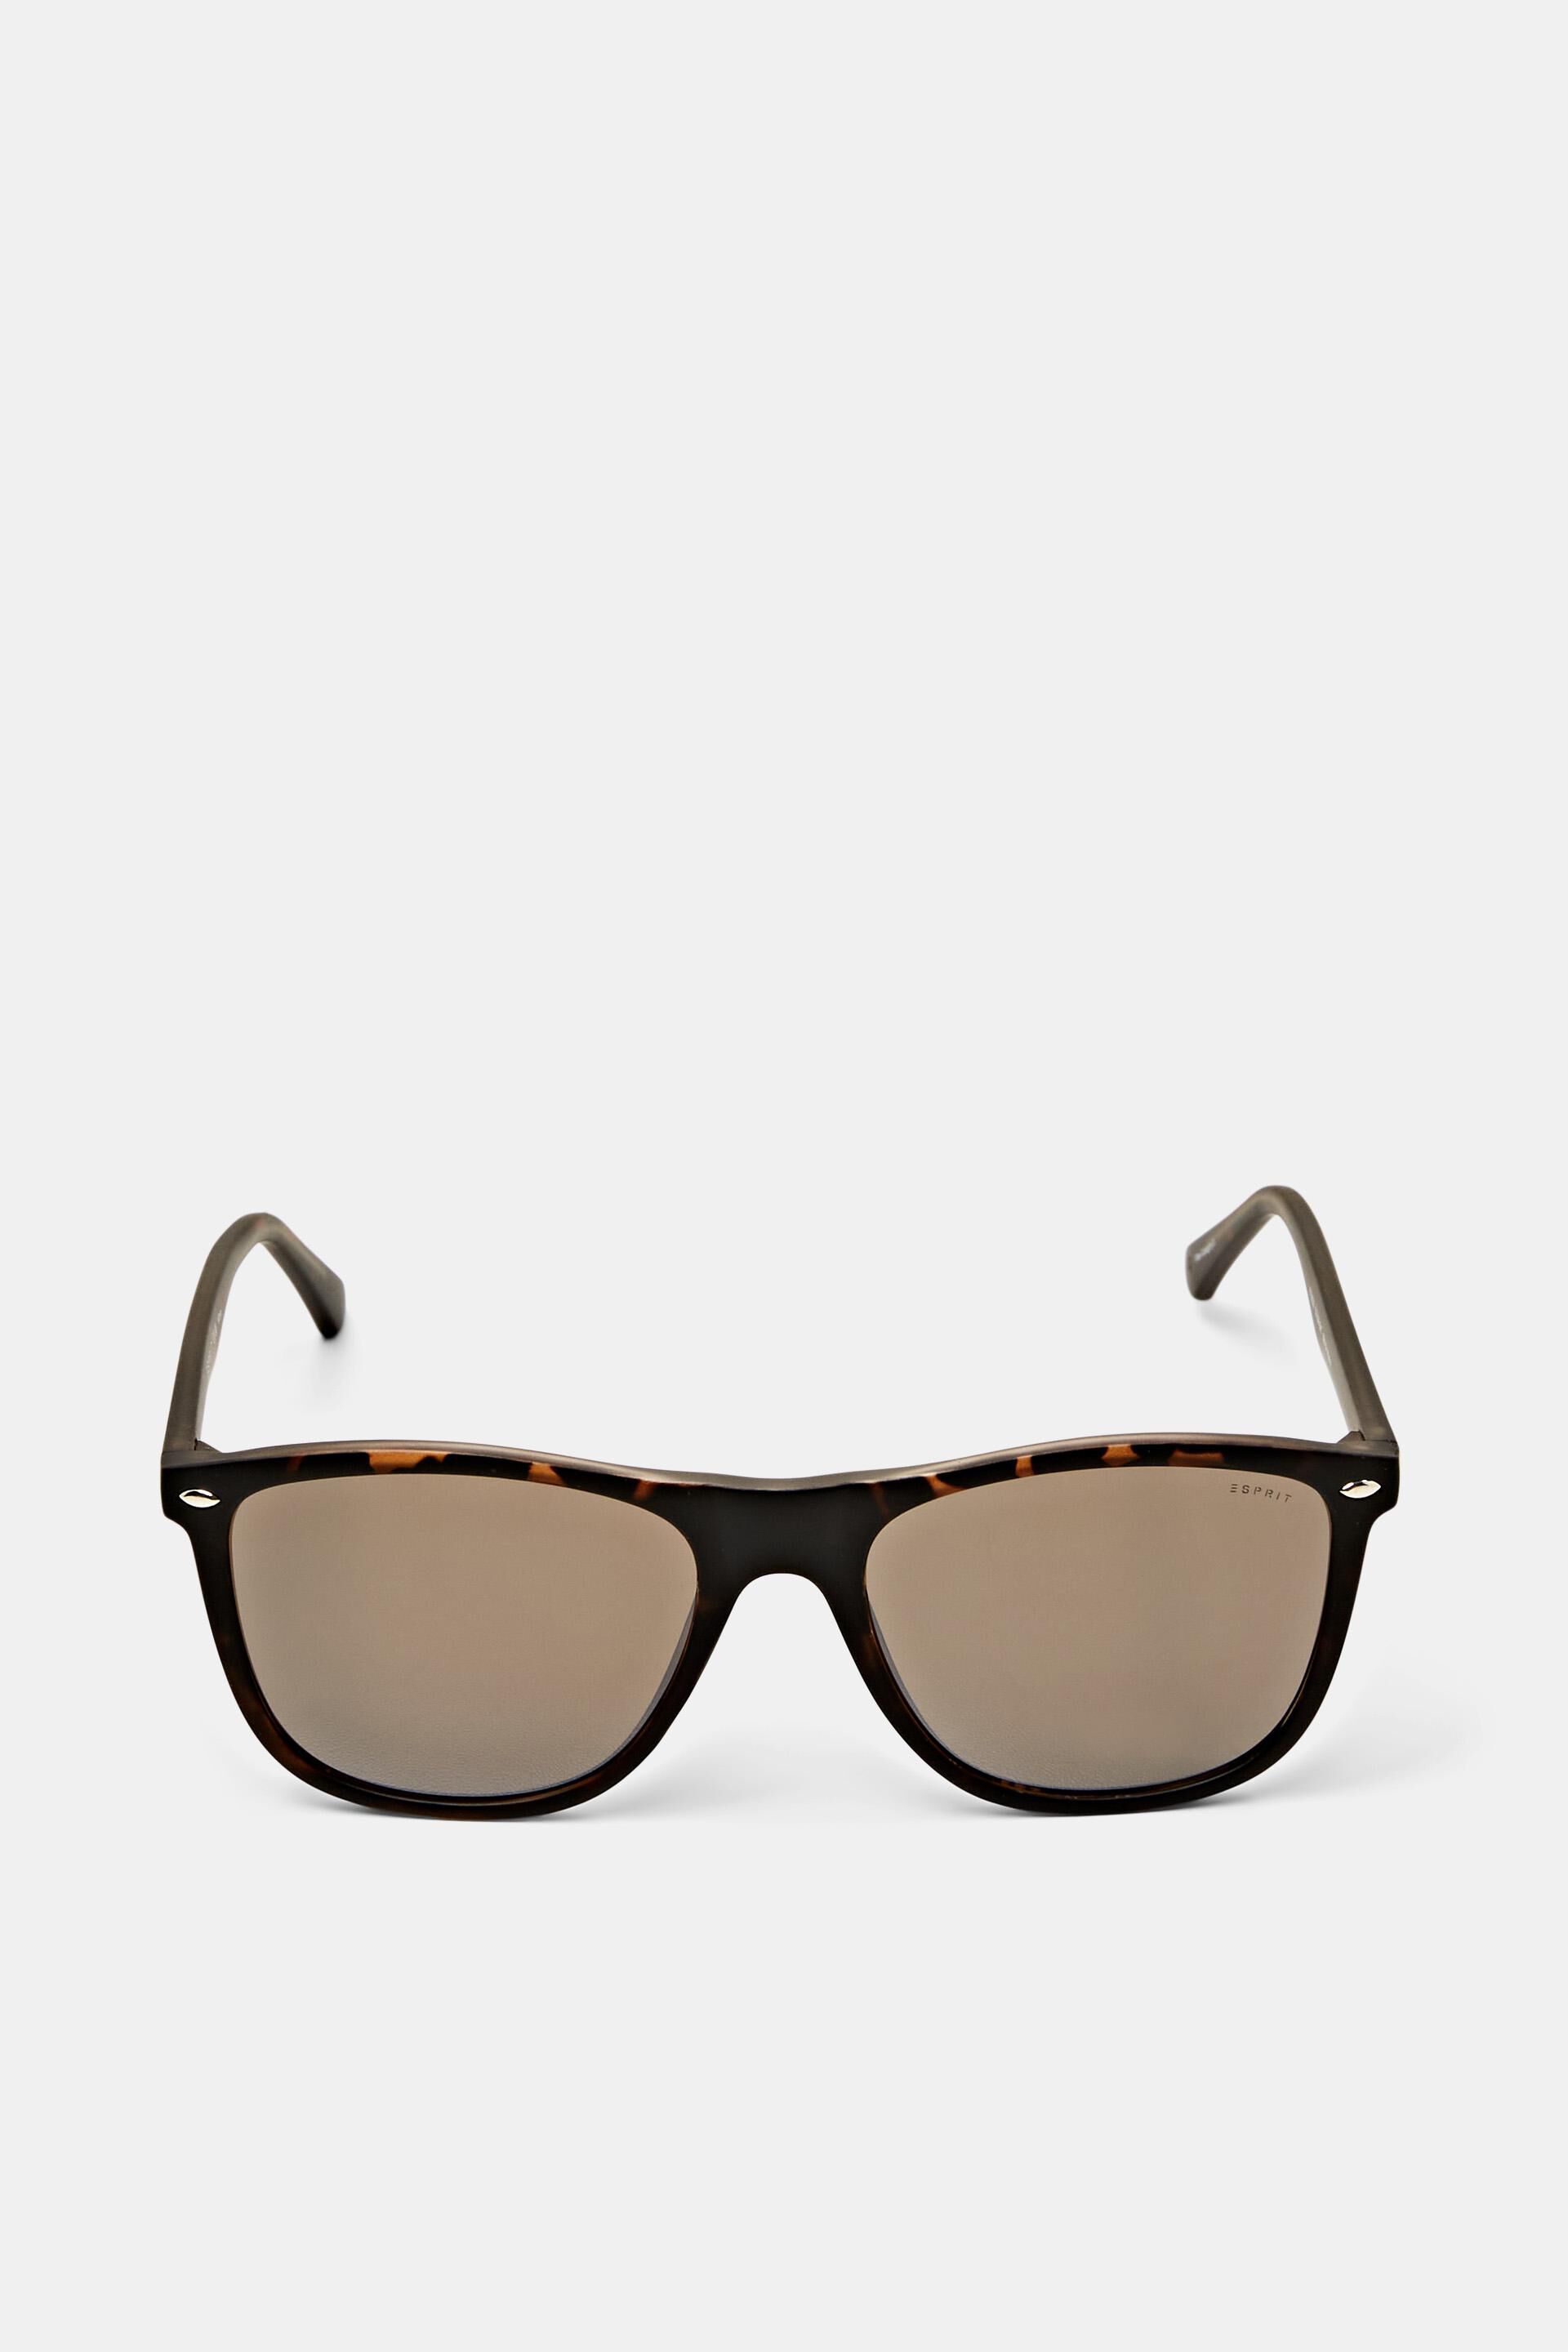 Esprit Square frame sunglasses